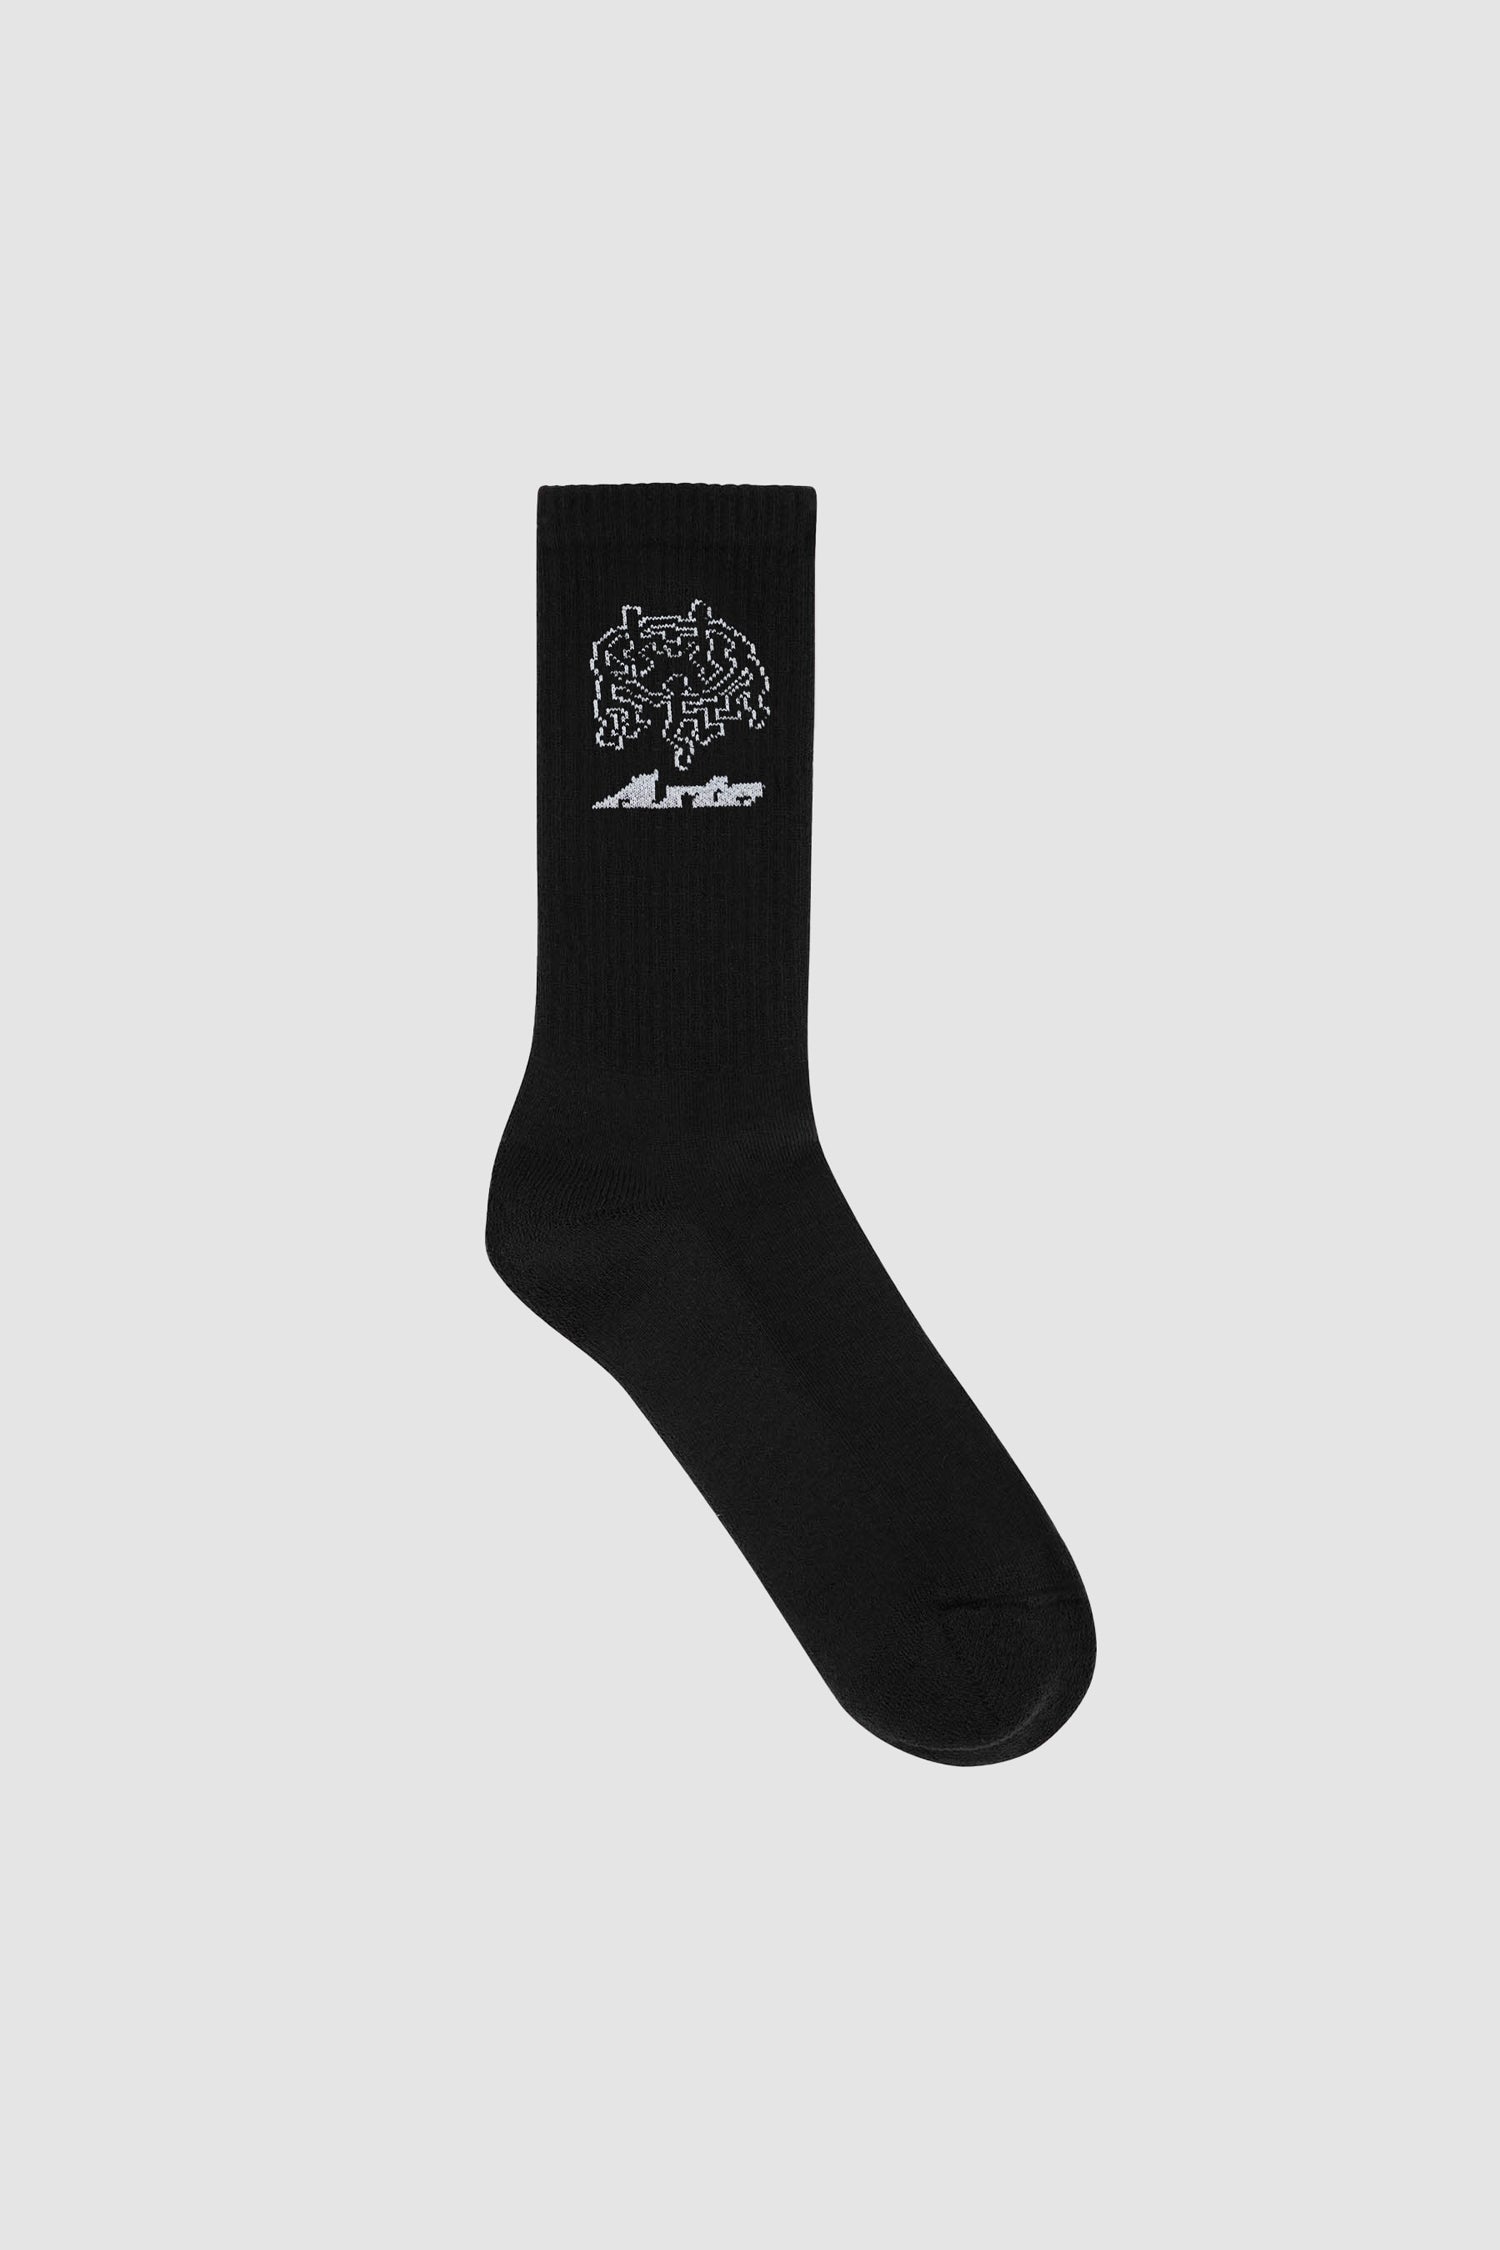 Pixel Dancer Socks - Black